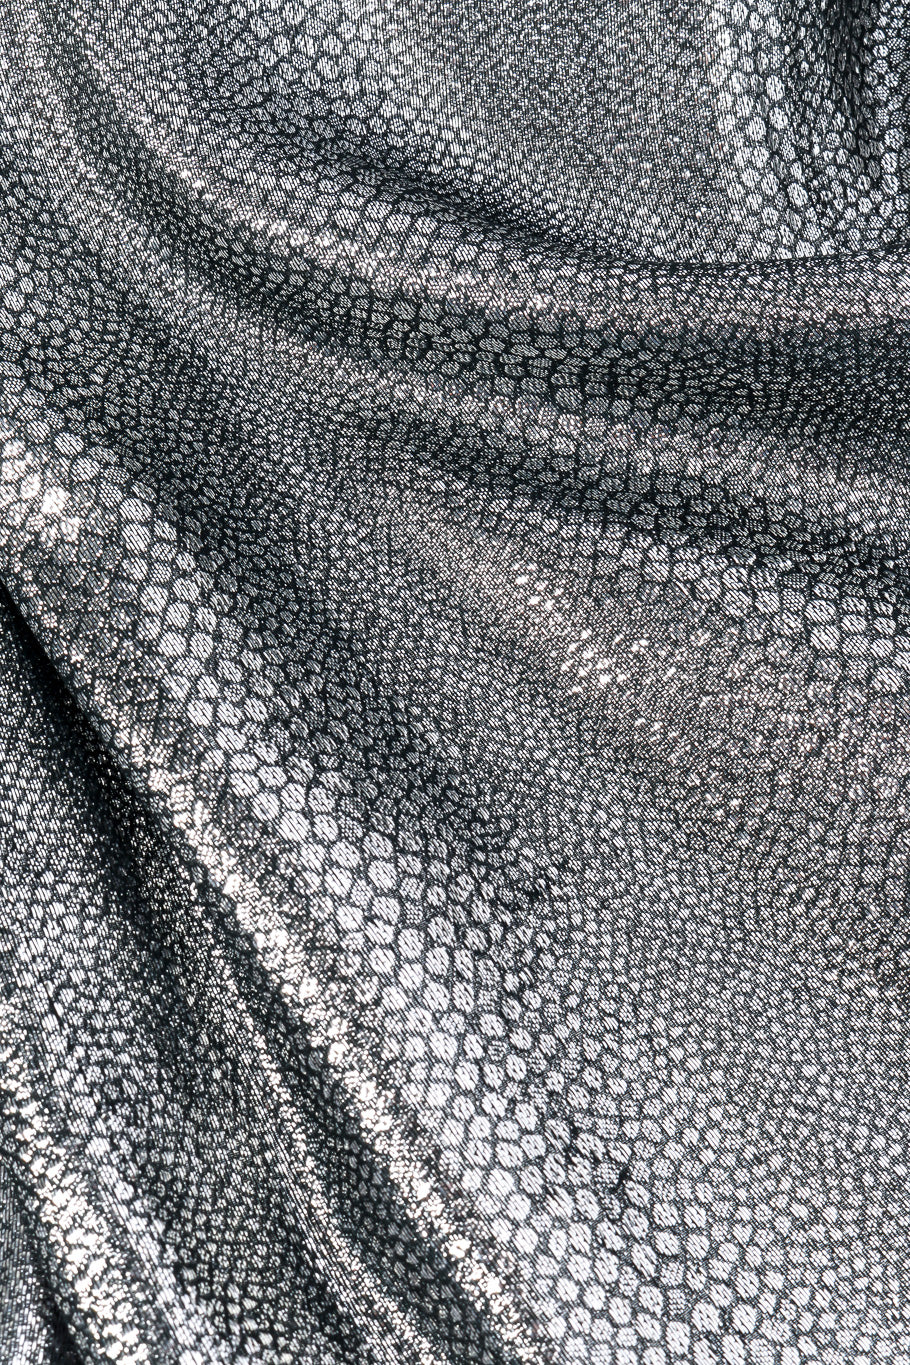 Metallic dress by Tracy Mills flat lay fabric close @recessla